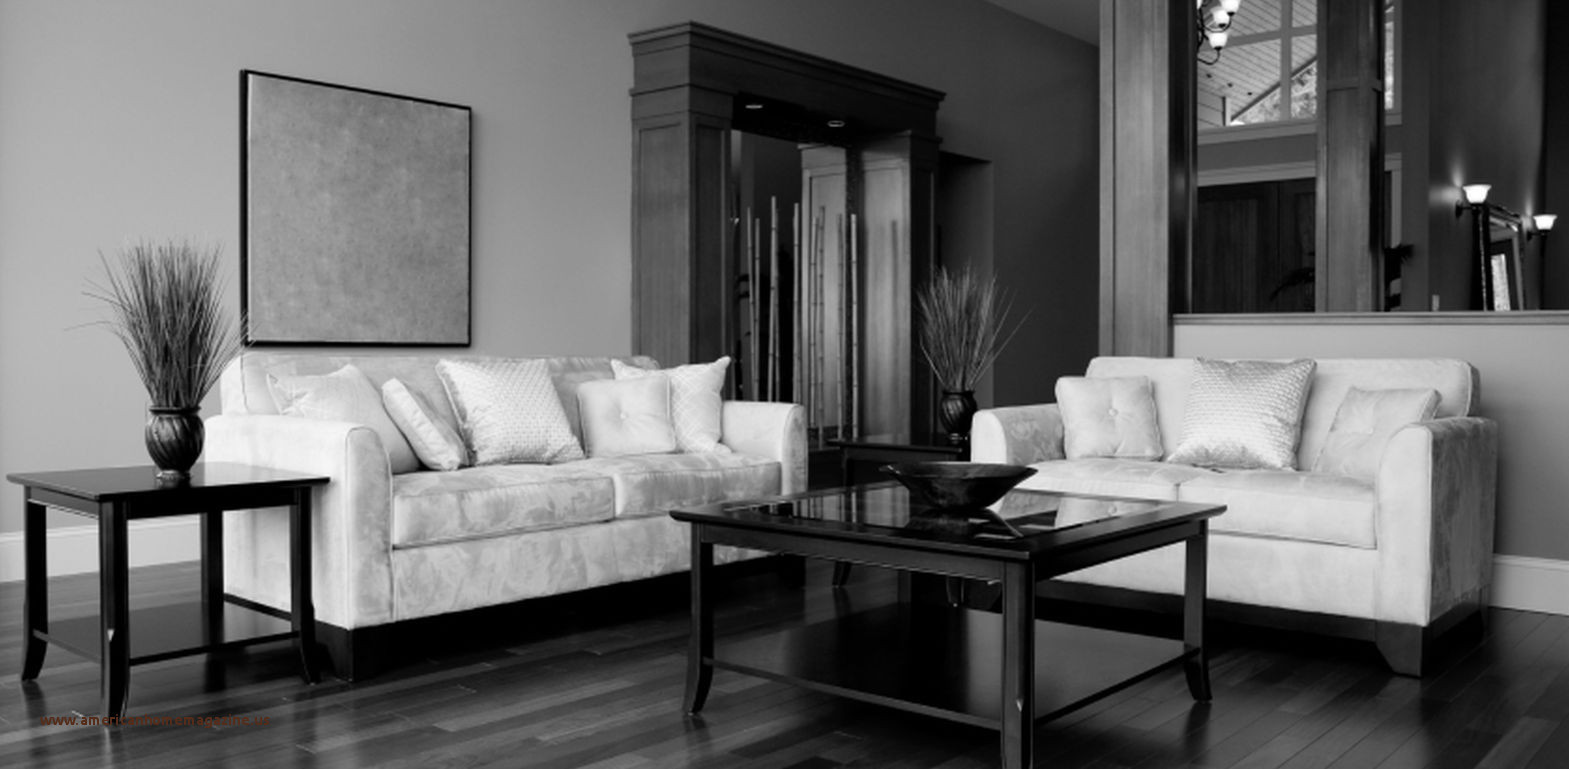 19 Lovely Furniture For Dark Hardwood Floors Unique Flooring Ideas